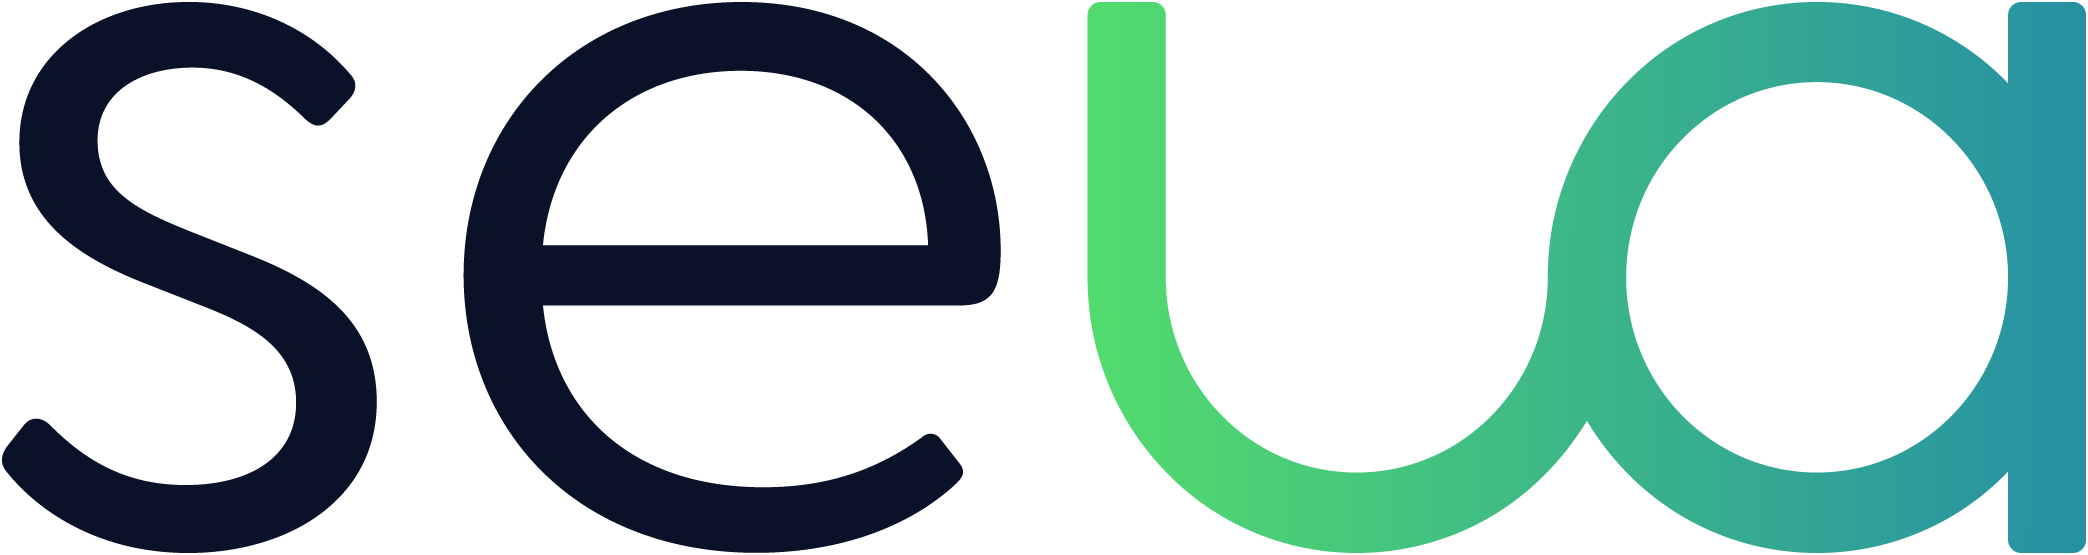 SEUA logotipo